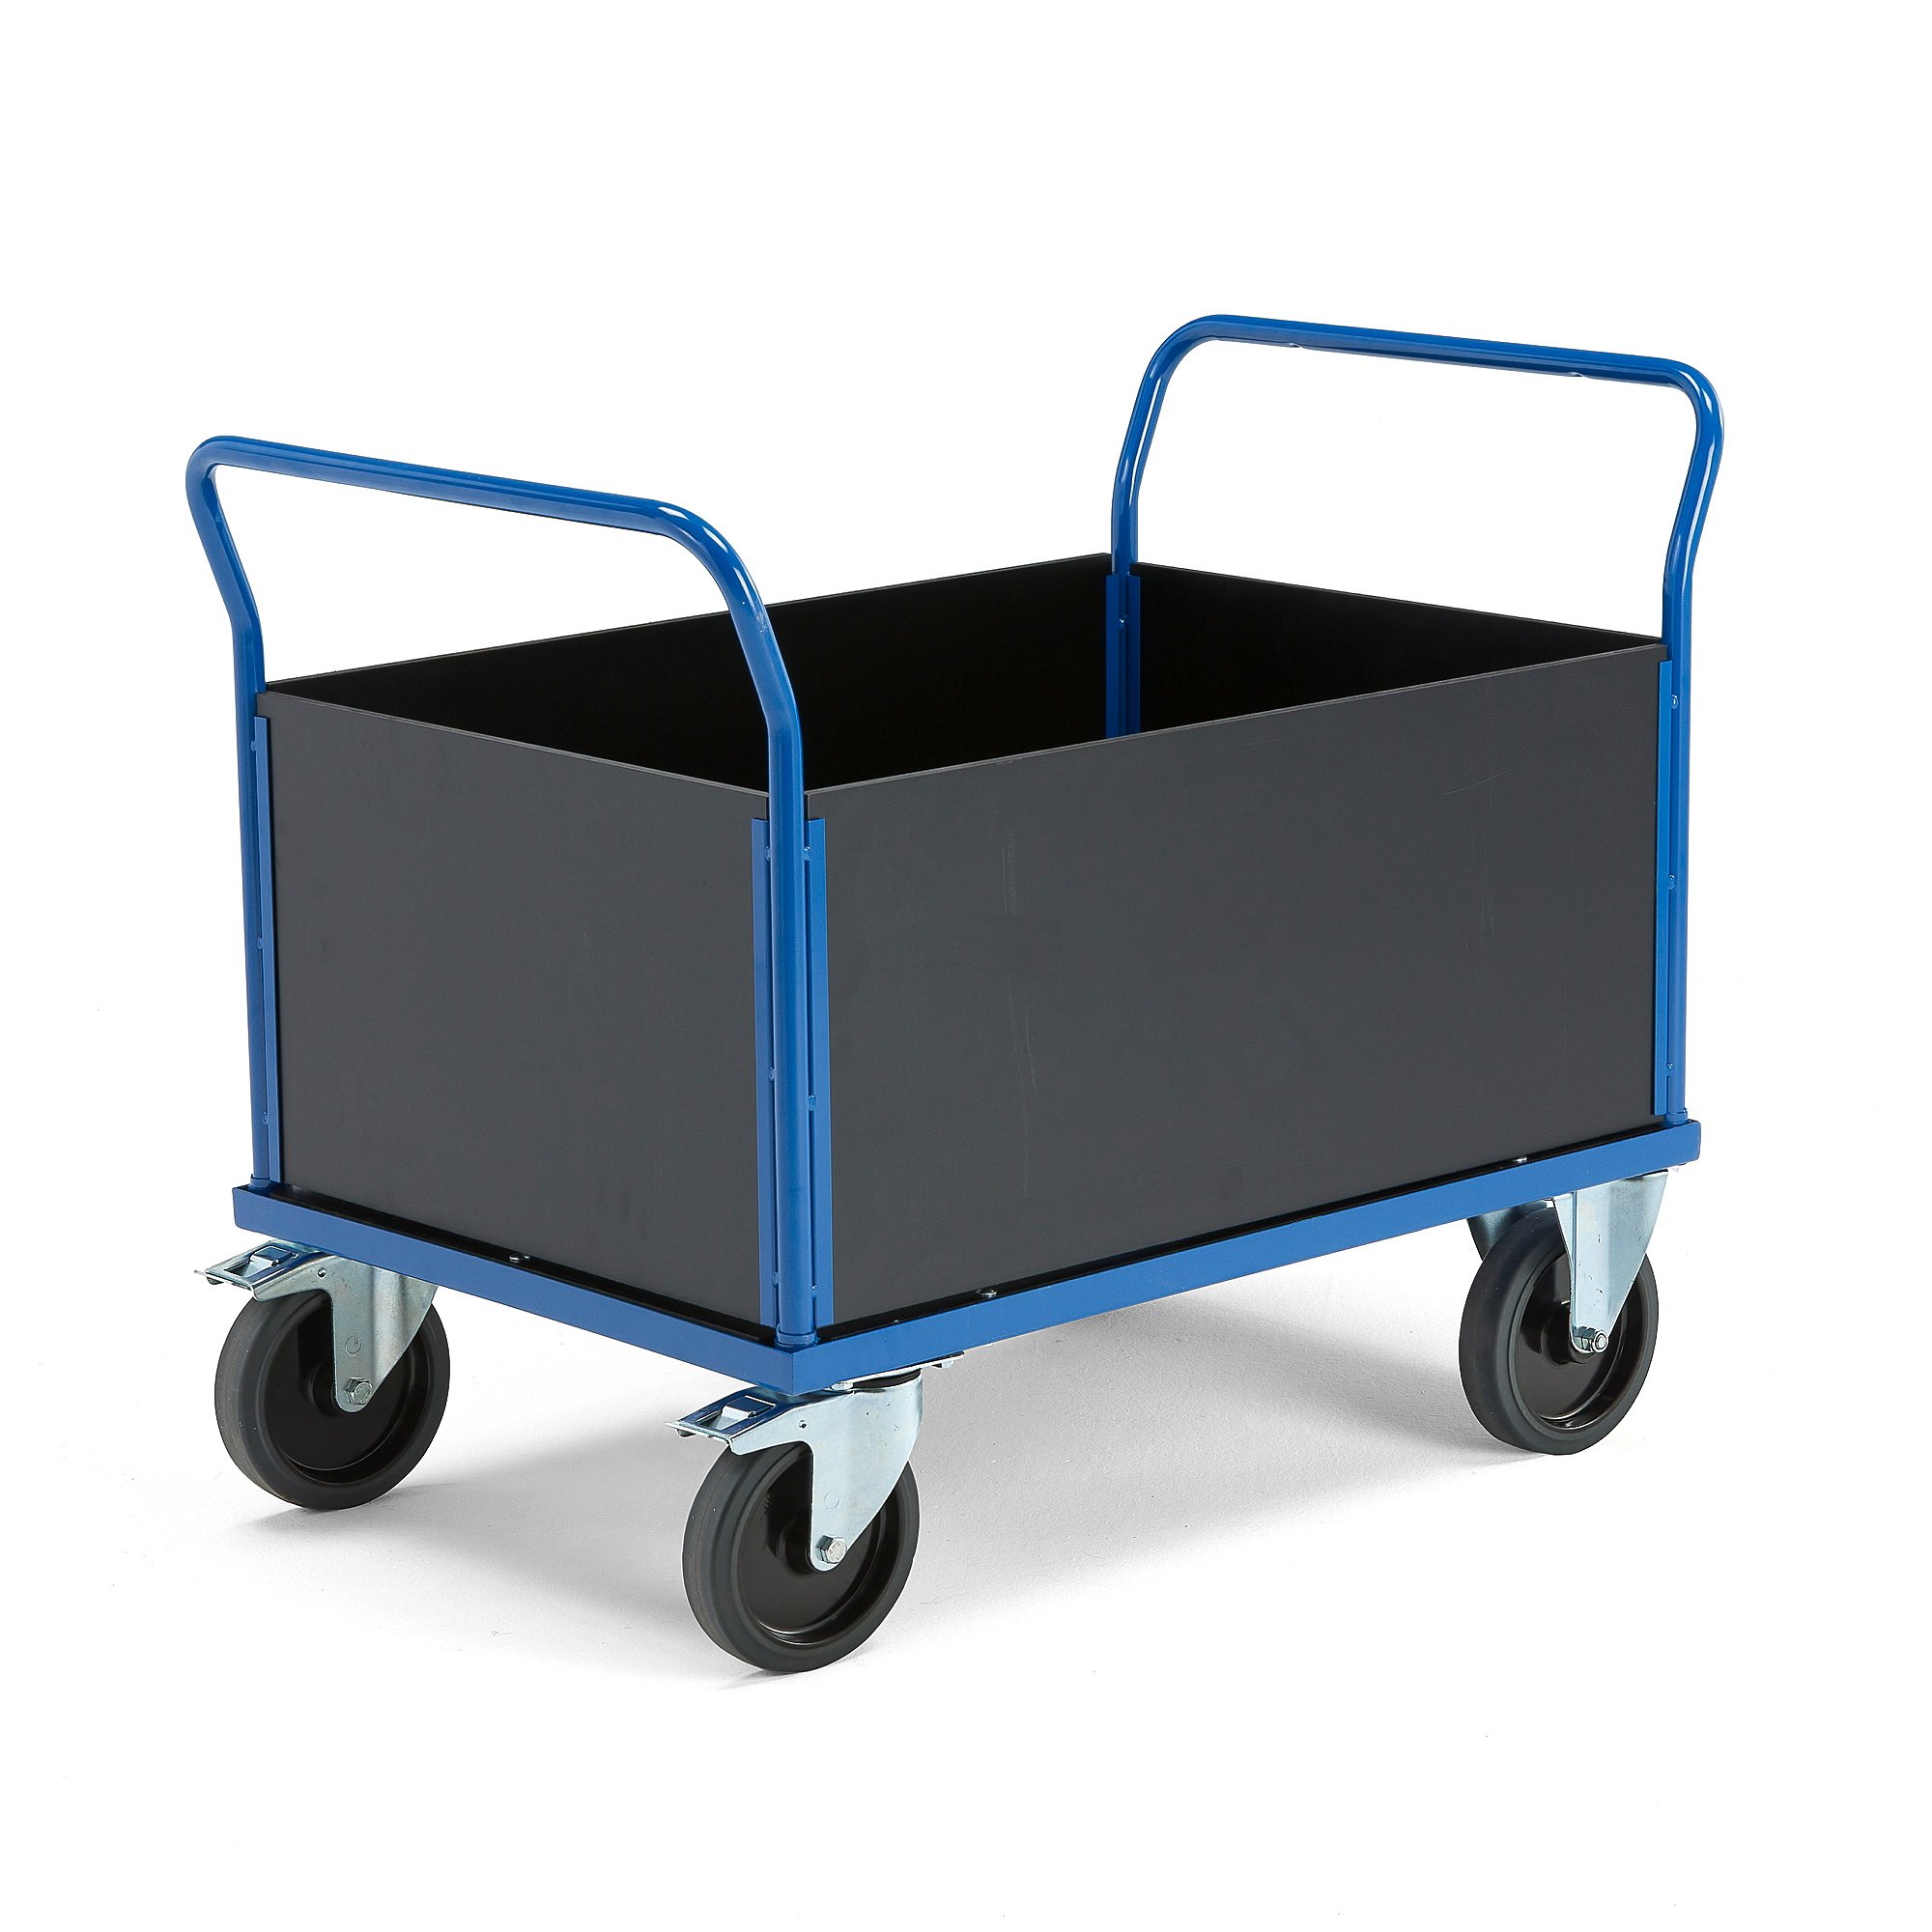 Plošinový vozík TRANSFER, 4 dřevěné stěny, 1000x700 mm, 1000 kg, elastická gumová kola, s brzdami